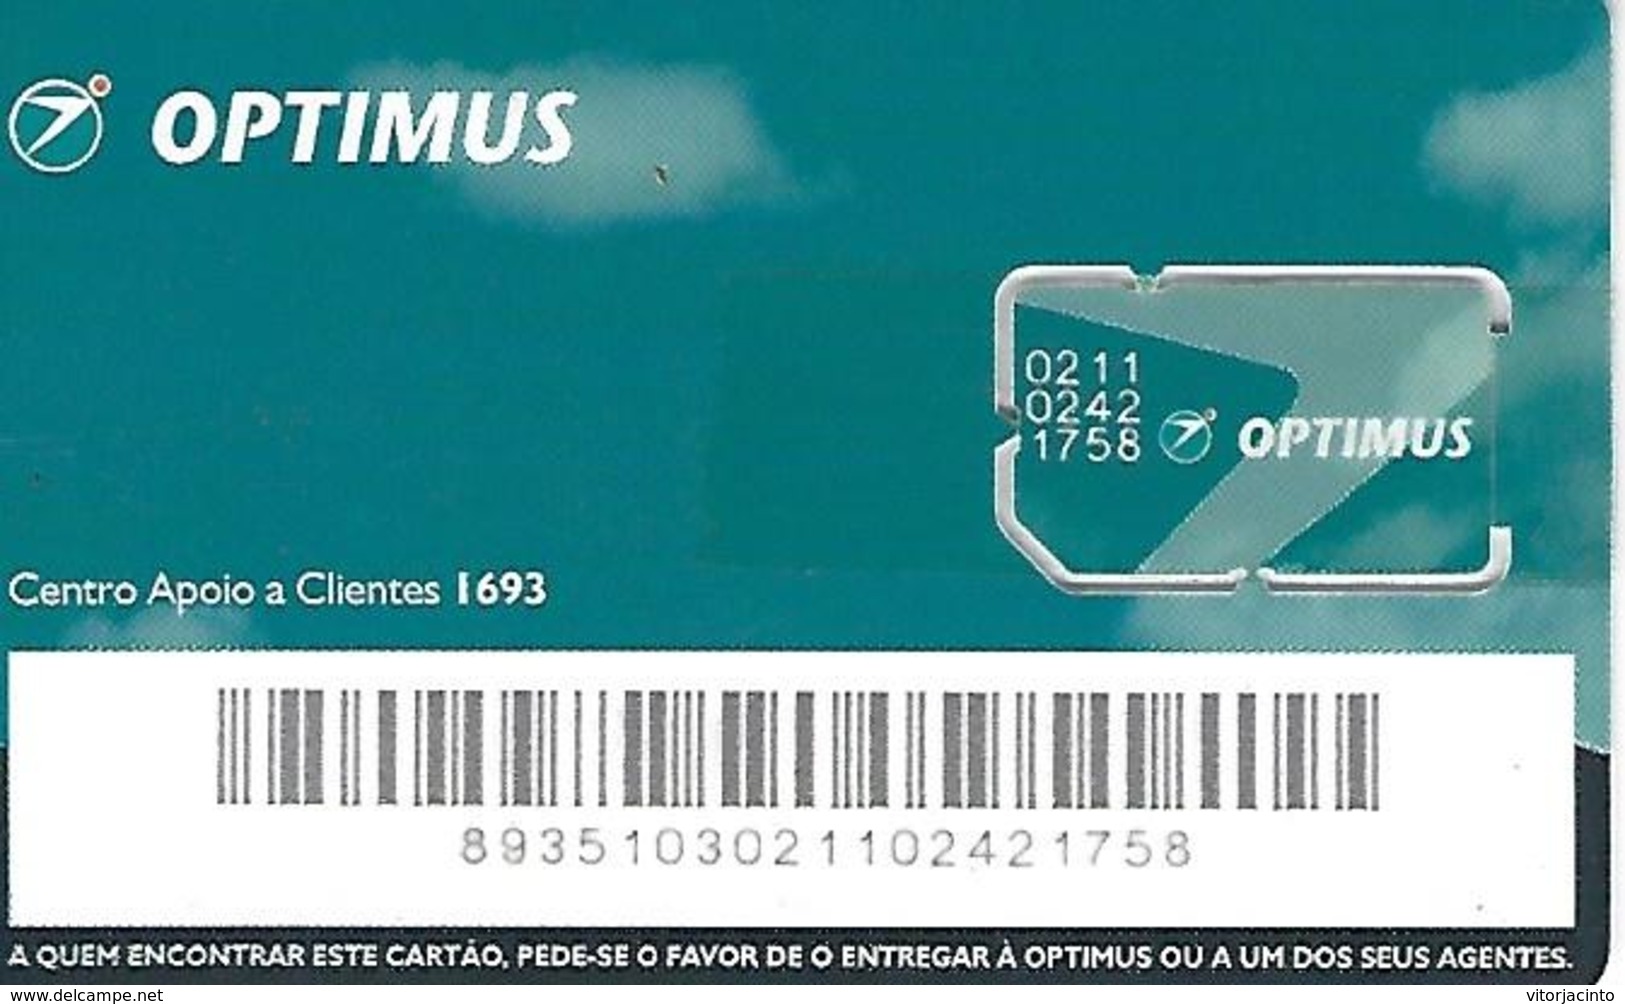 Optimus Mobile Phone Card GSM - Portugal - Portugal